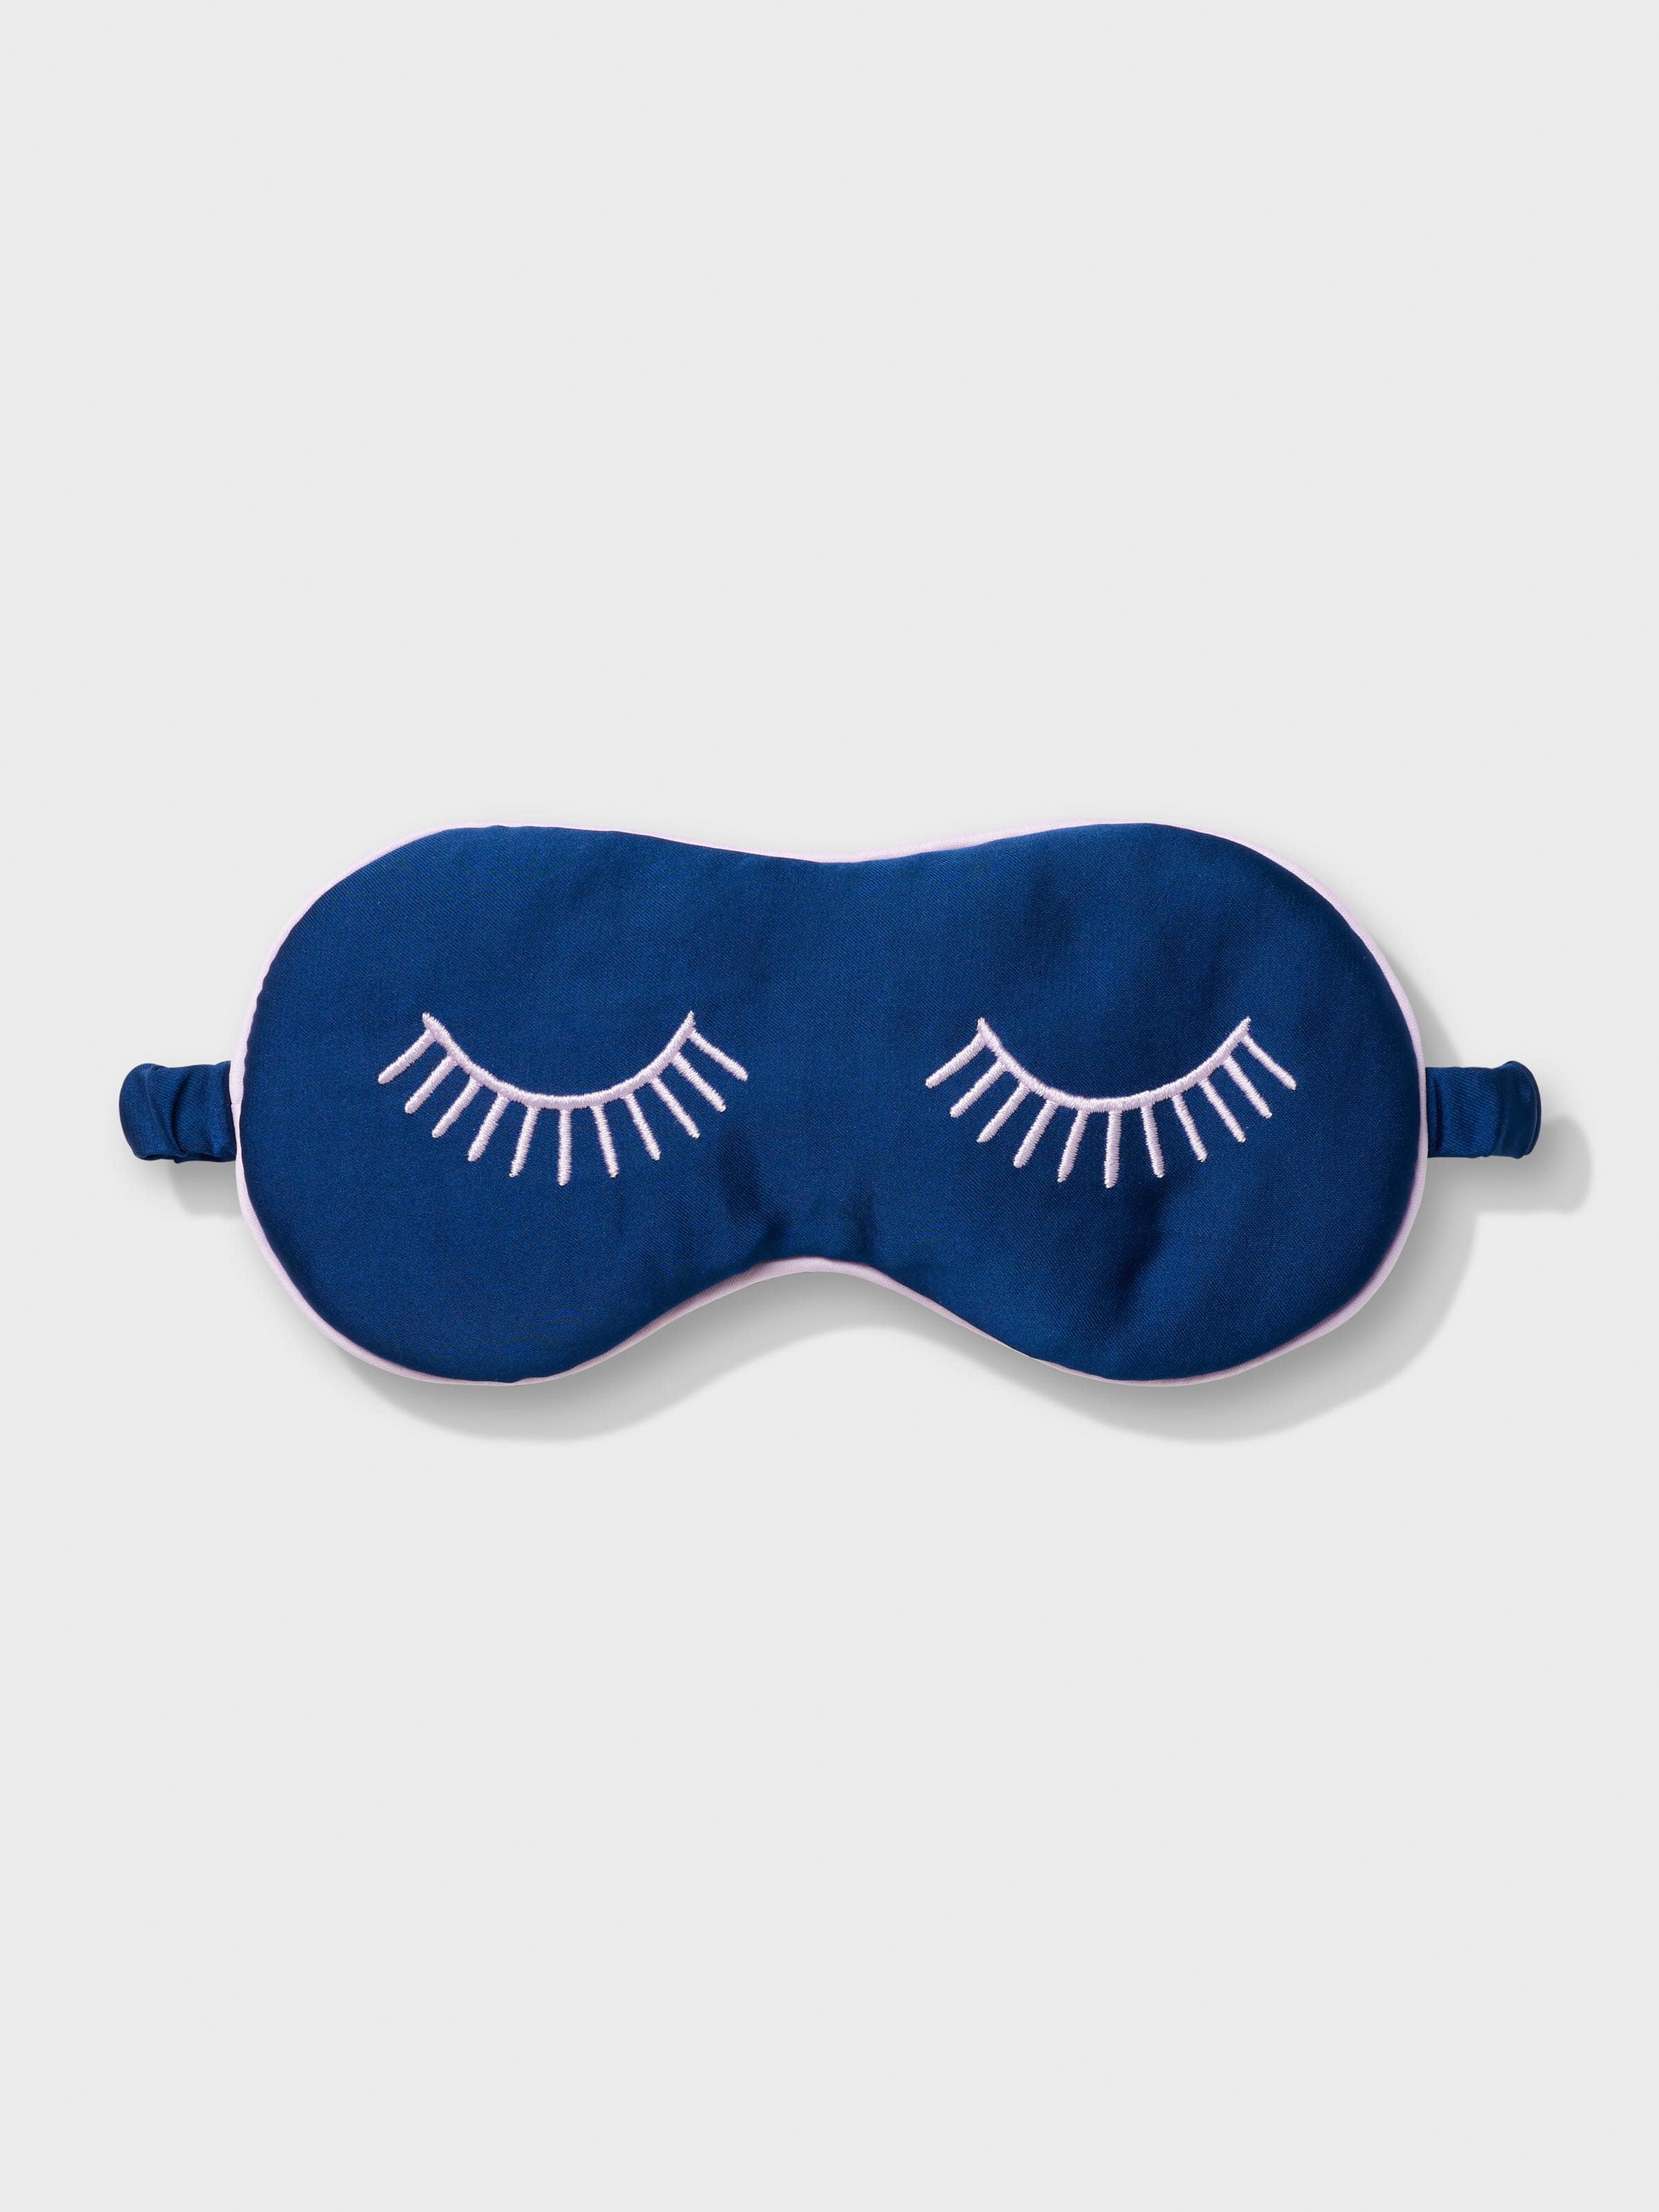 Sleep Eye Mask for Men, Personalised Gift for Him -  Hong Kong